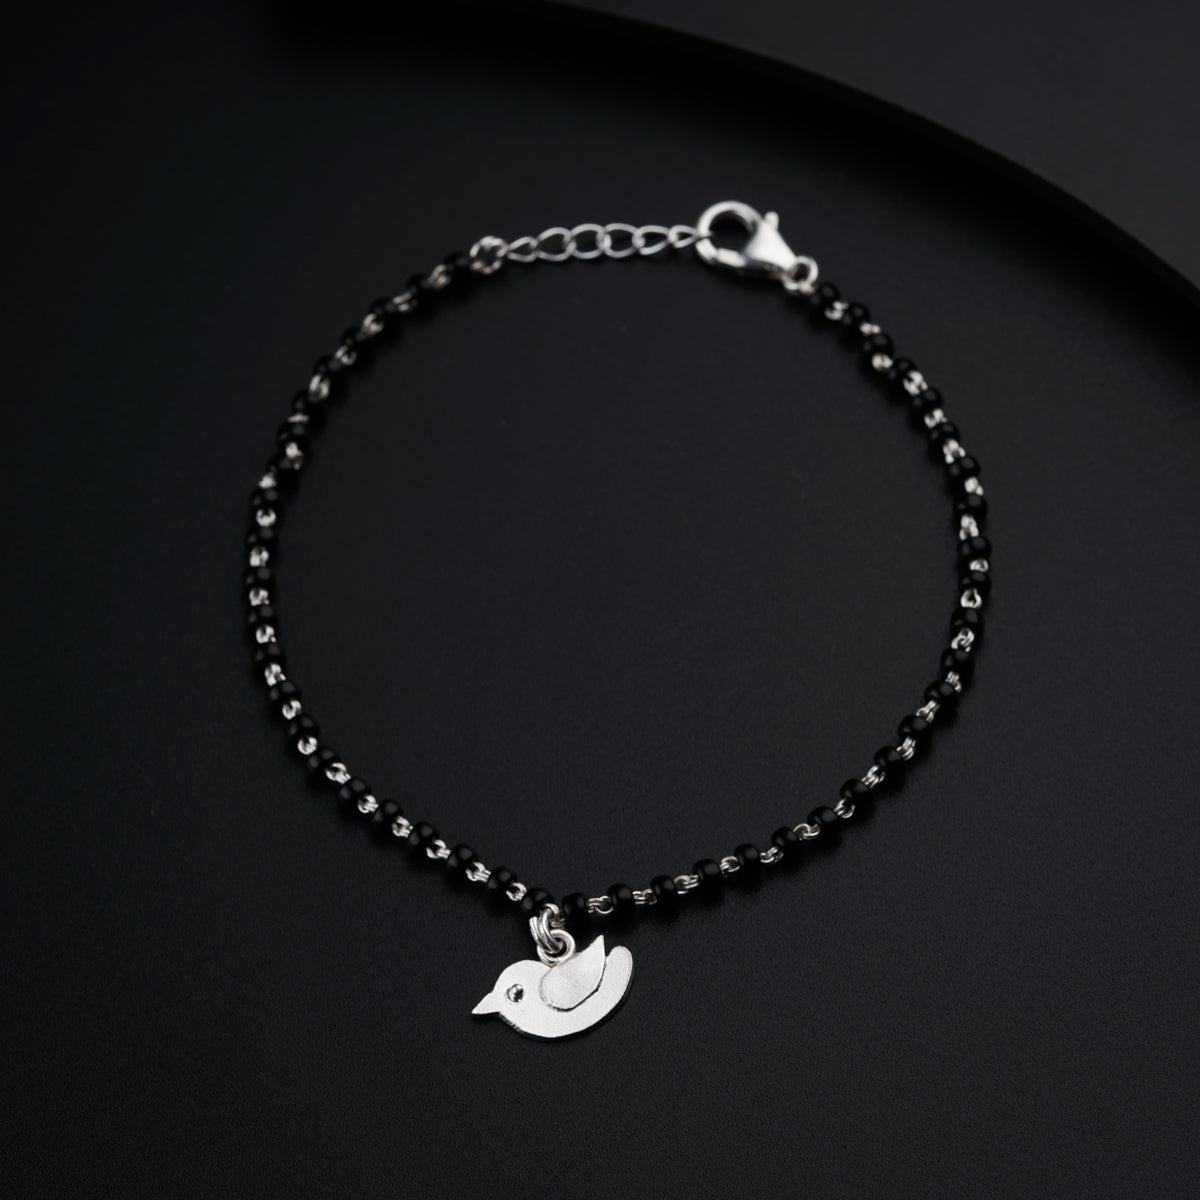 a black beaded bracelet with a silver bird charm